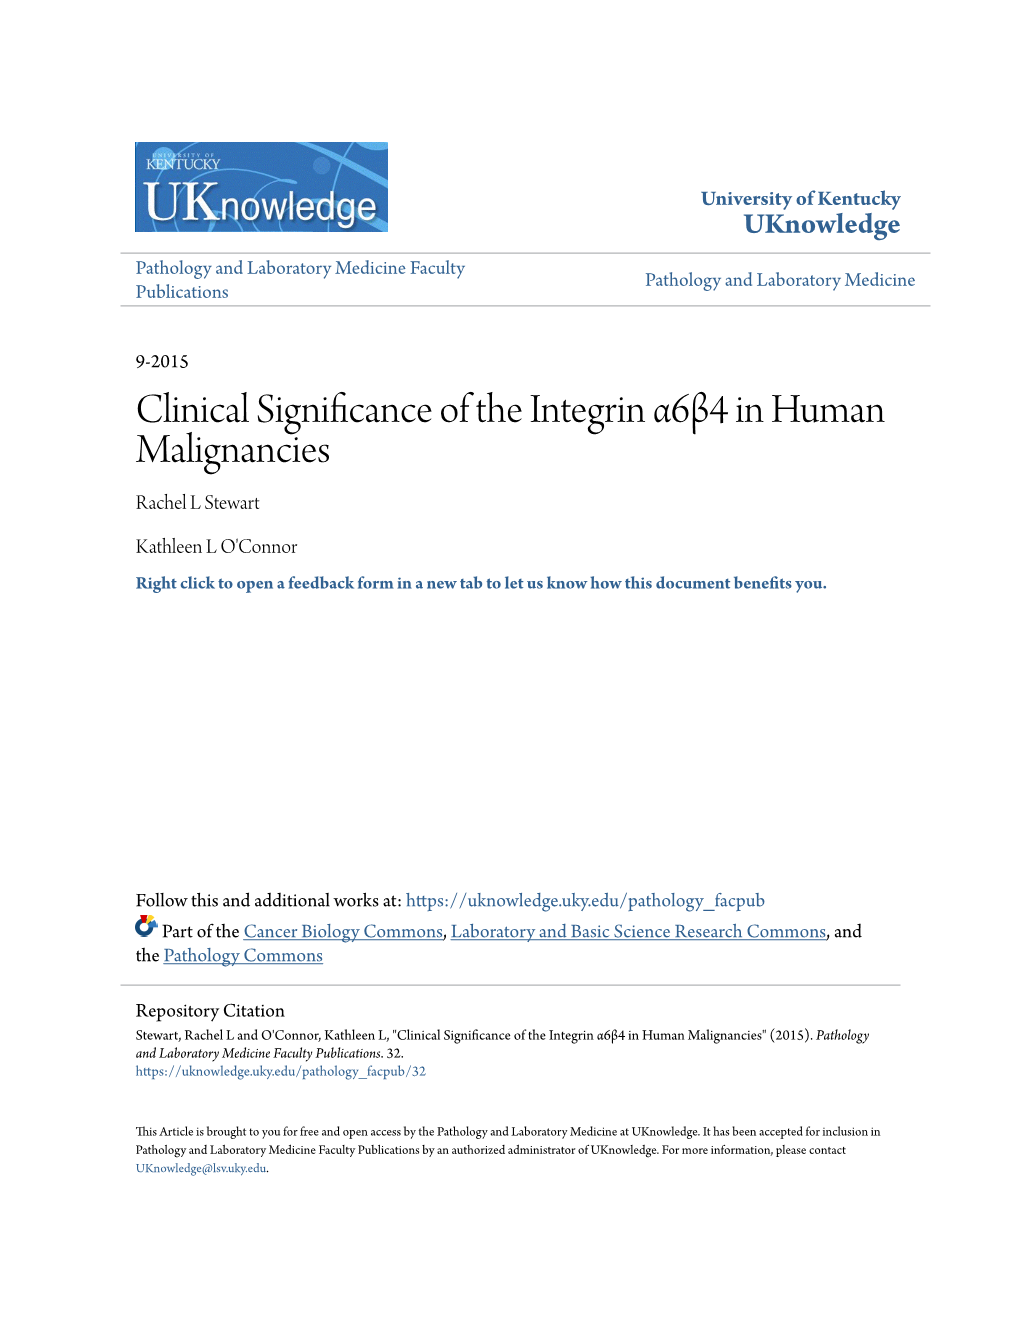 Clinical Significance of the Integrin Α6β4 in Human Malignancies Rachel L Stewart